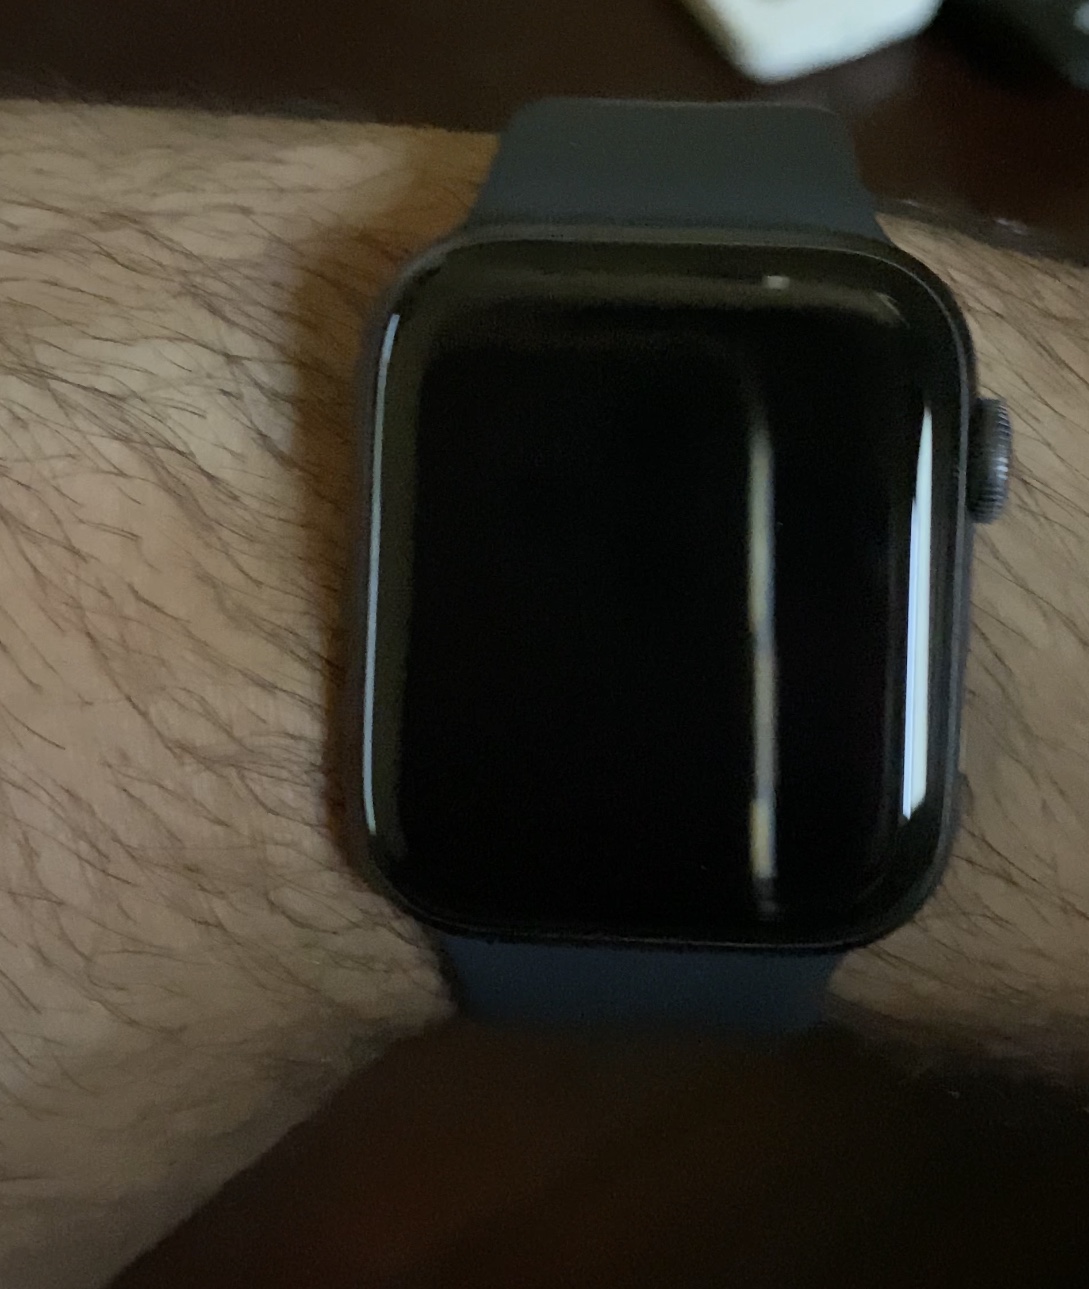 Apple Watch black screen - Apple Community